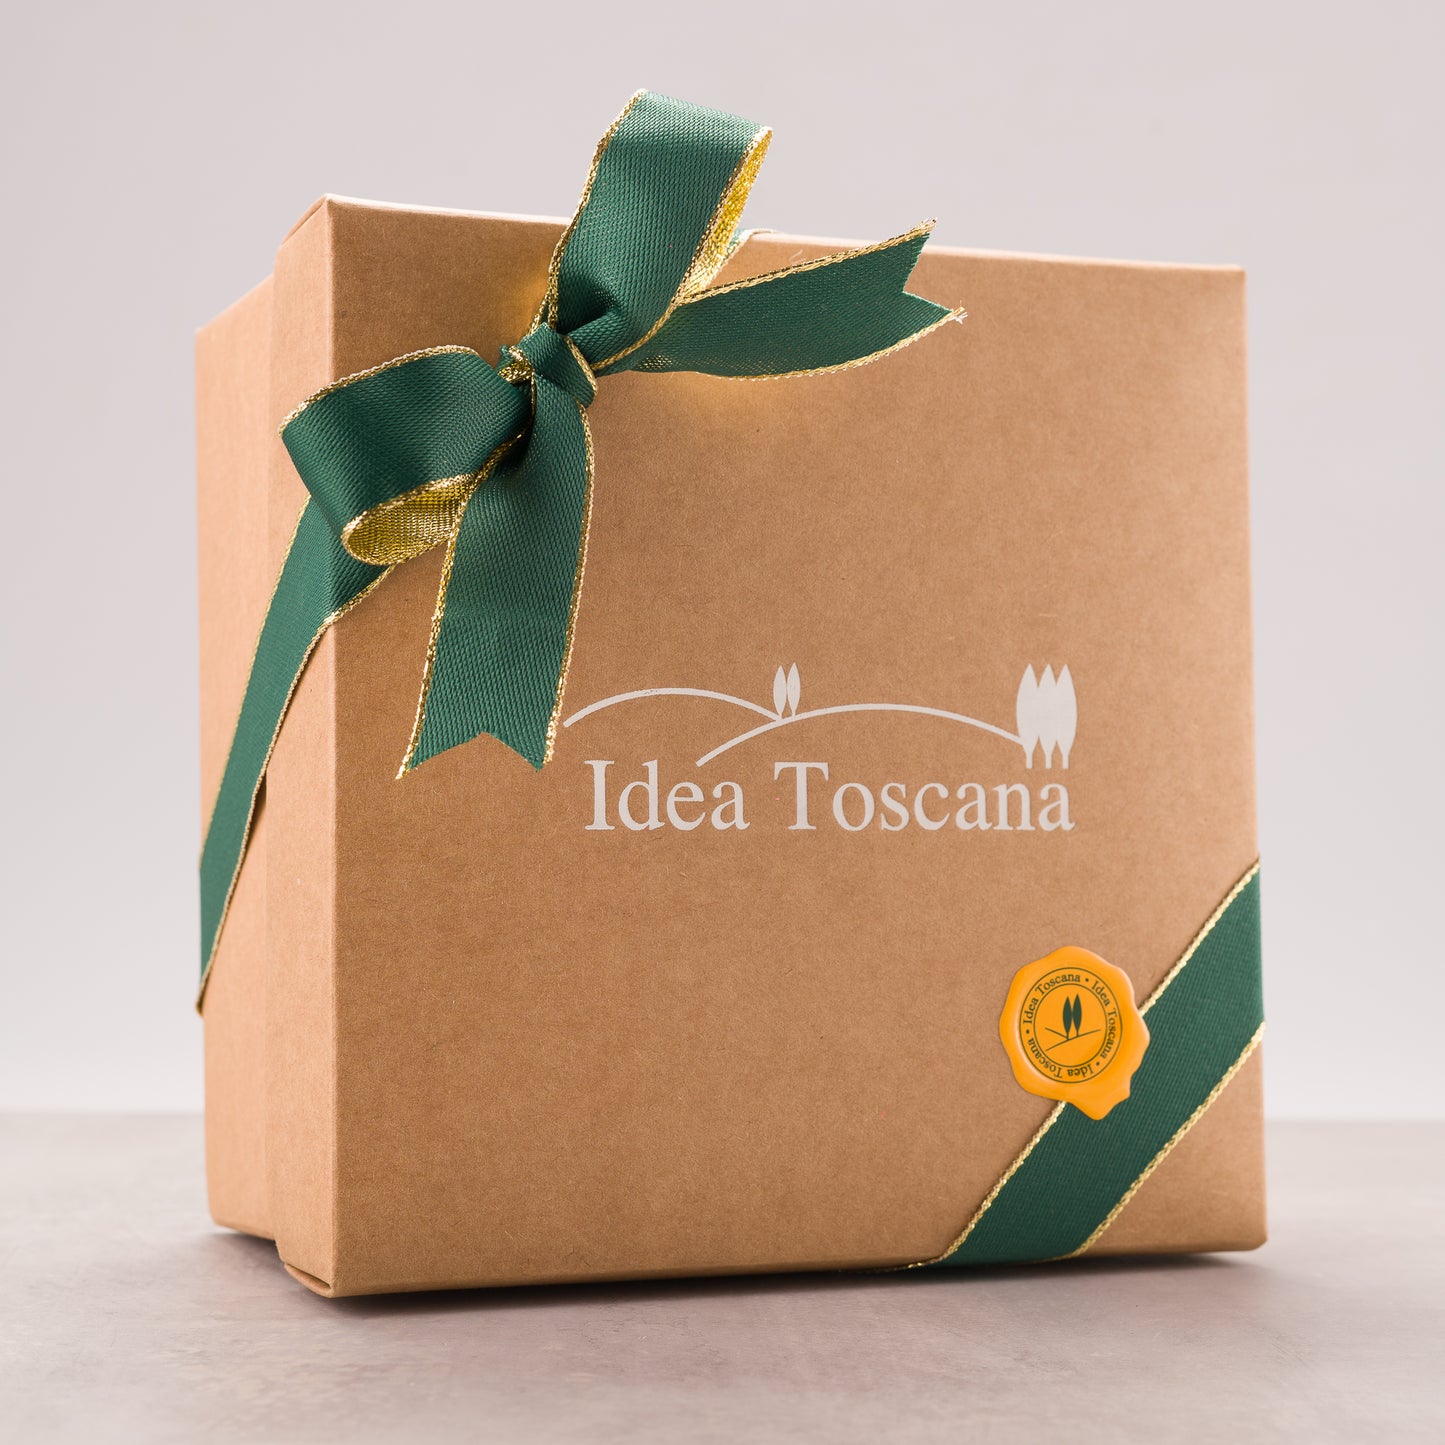 Total body wellness package - Idea Toscana